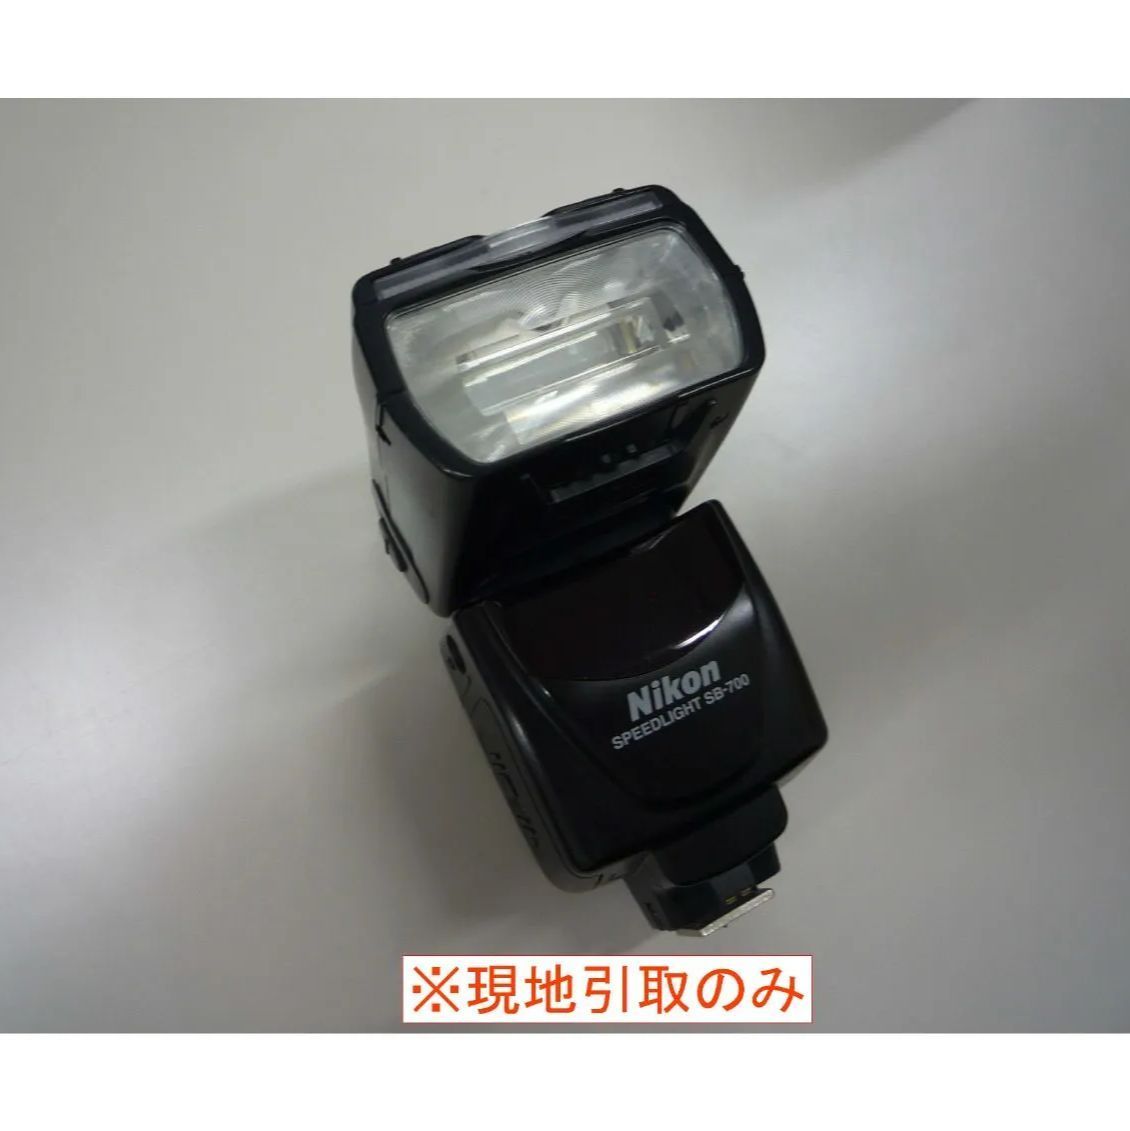 Nikon スピードライトSB700 ジャンク